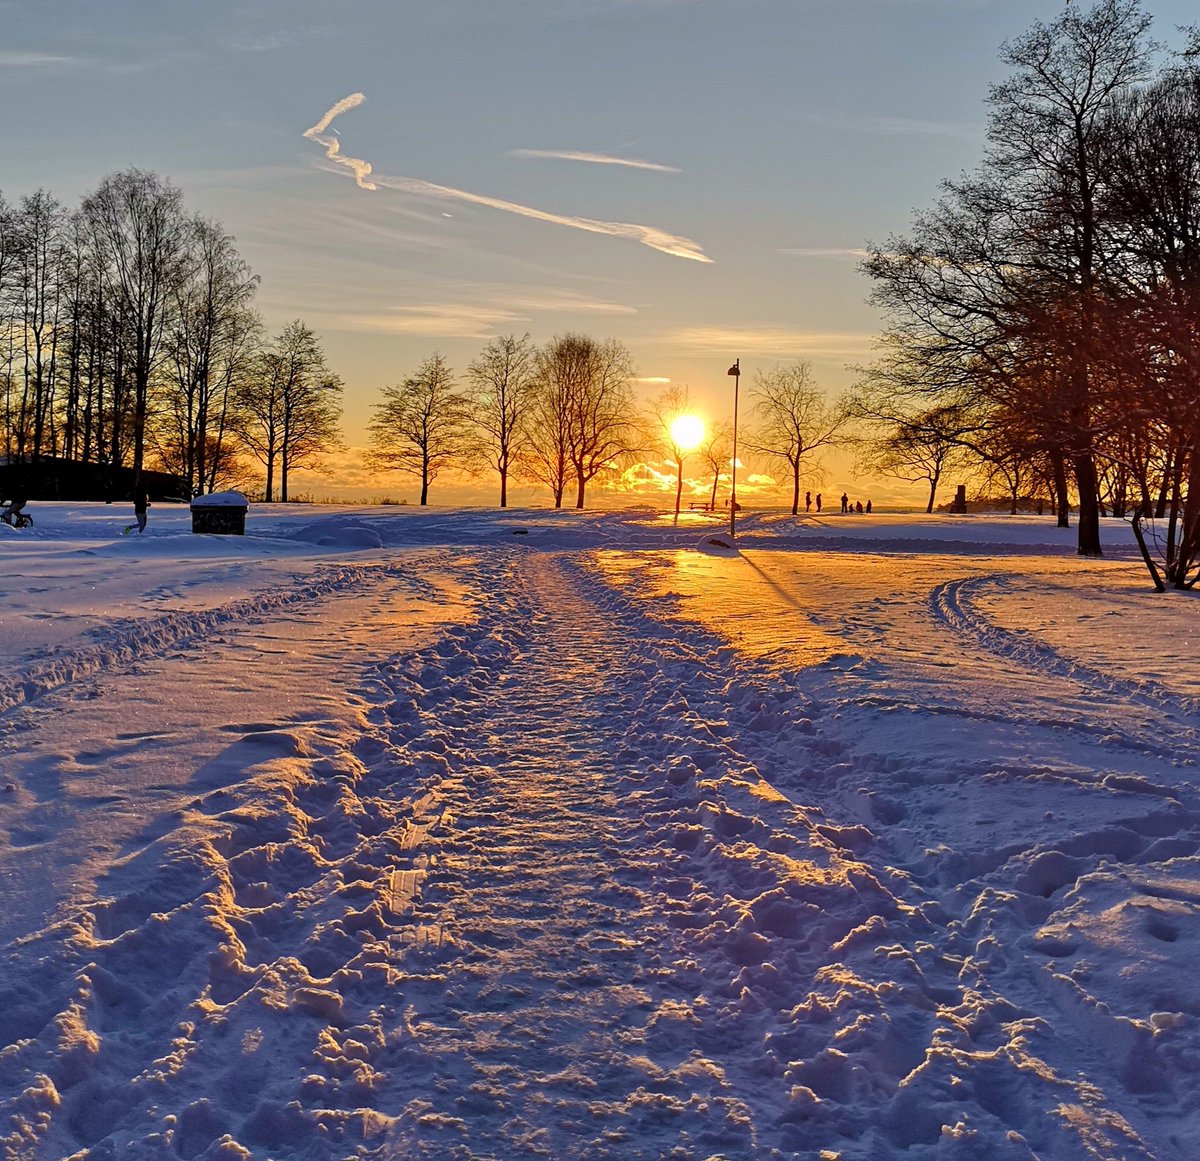 Winter sunset #Helsinki #Finland #photography #StormHour #travel #Photograph #weather #nature #sunset #photo #landscape #Winter #Snow #weekend #SundayMotivation #SundayThoughts #sunsetphotography